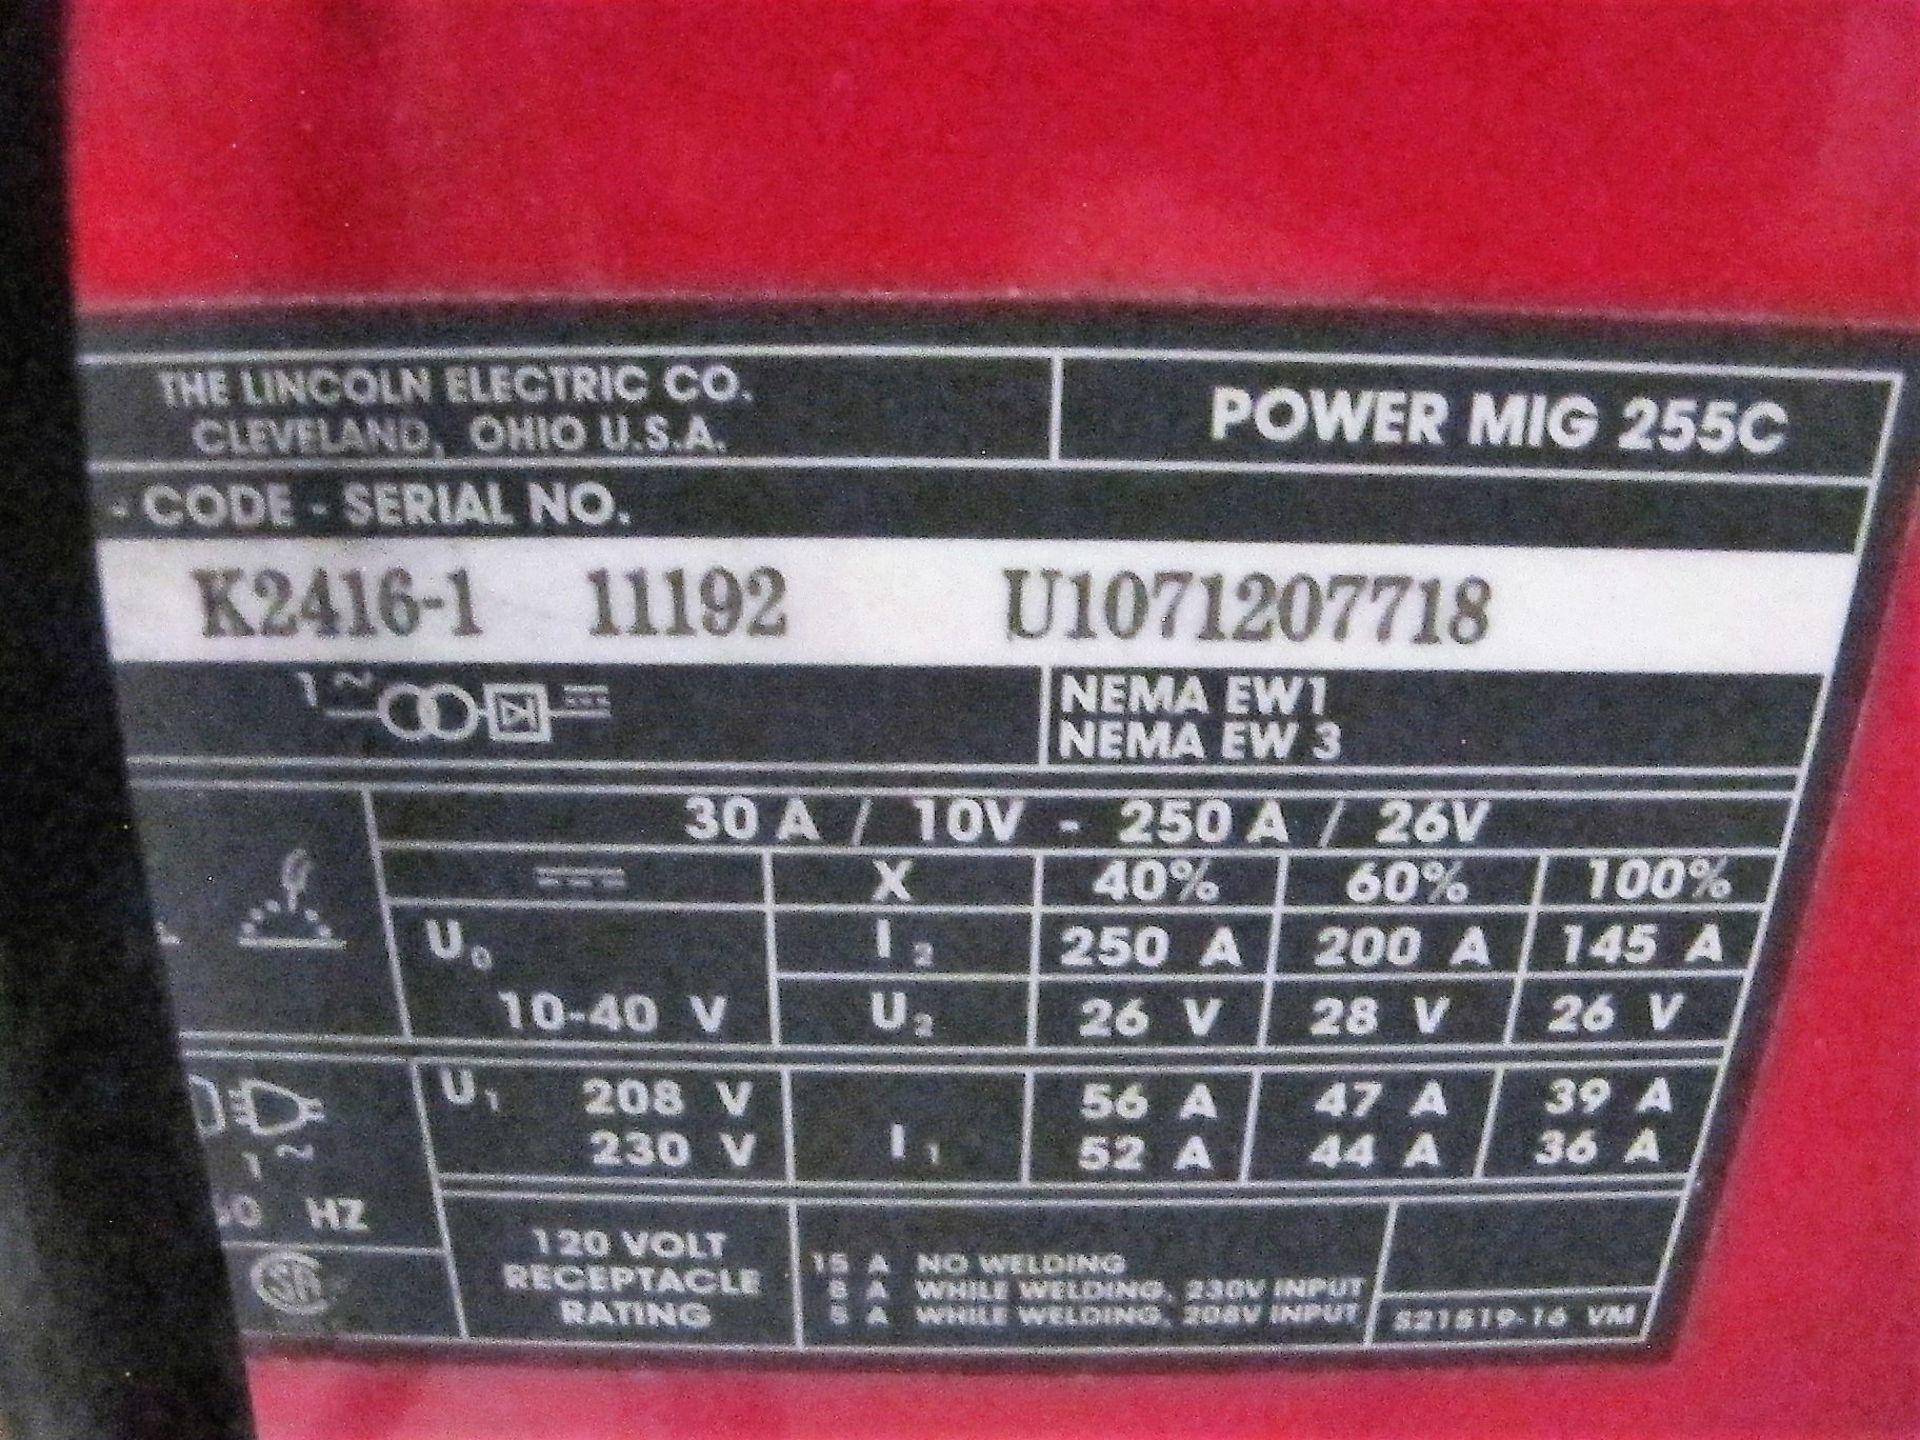 LINCOLN ELECTRIC POWER MIG 255C, S/N U1071207718, W/ REGULATOR, GUN, ETC. (NO ALUMINUM GUN) - Image 4 of 4